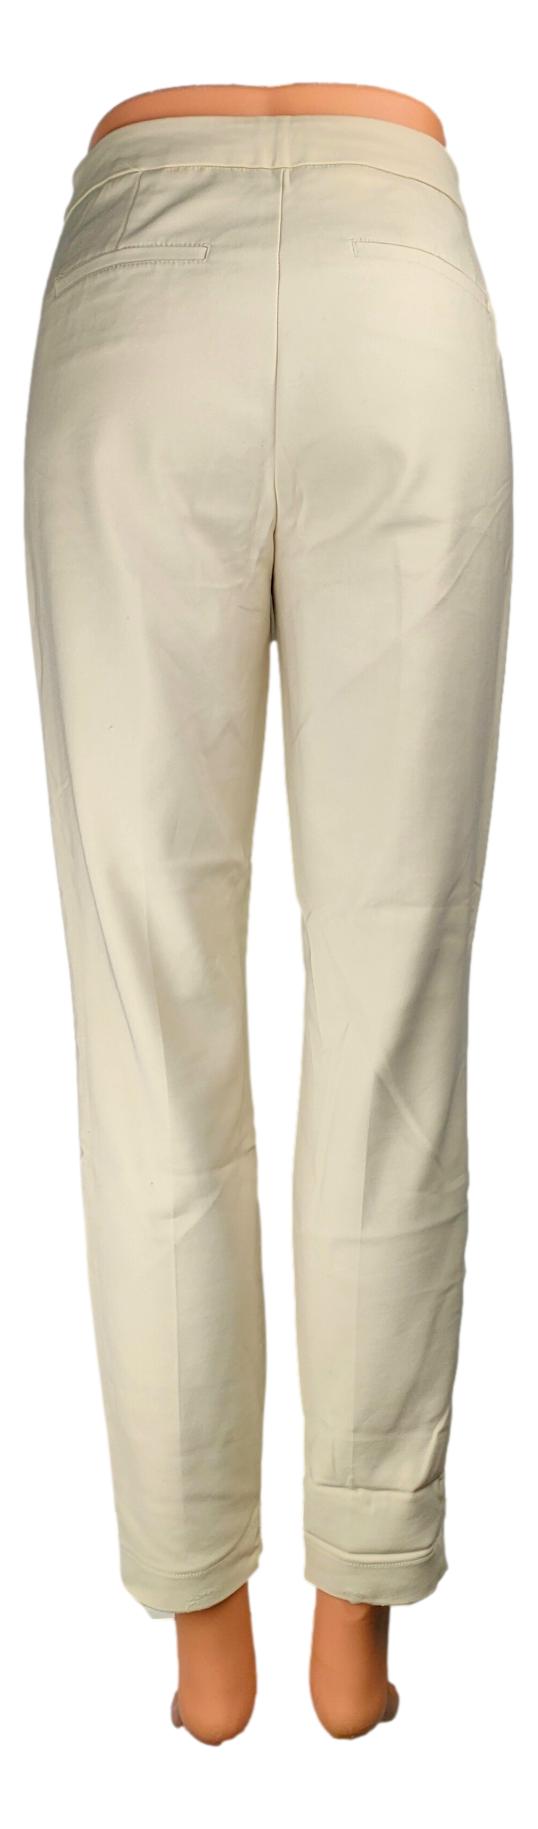 Pantalon Vero Moda - Taille 36